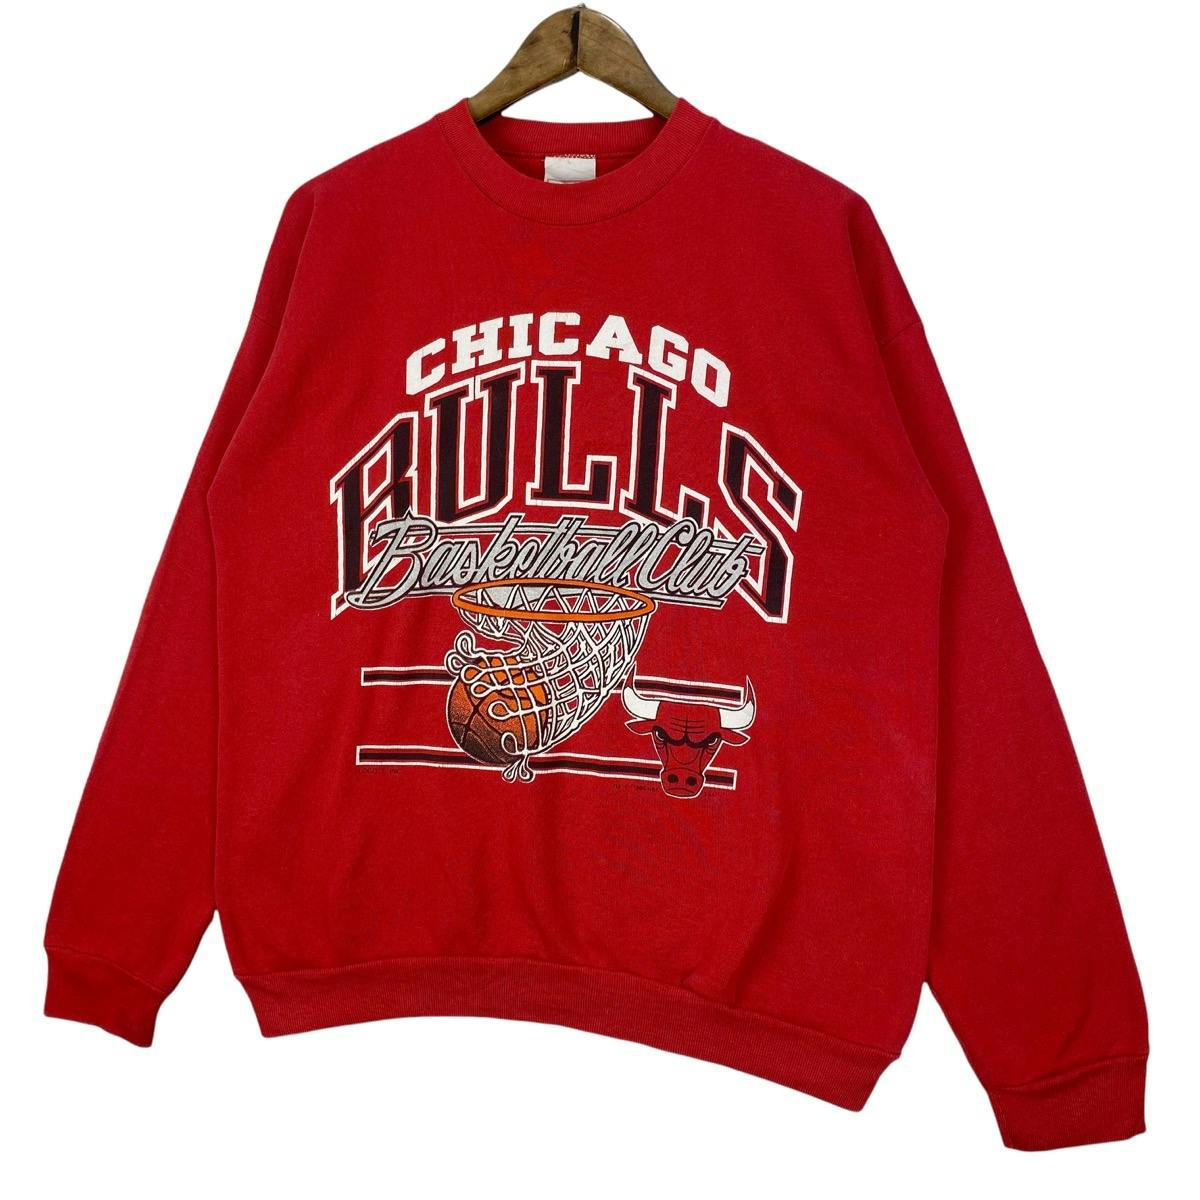 Vintage 1990 Chicago Bulls Basketball Club Sweatshirt - 4